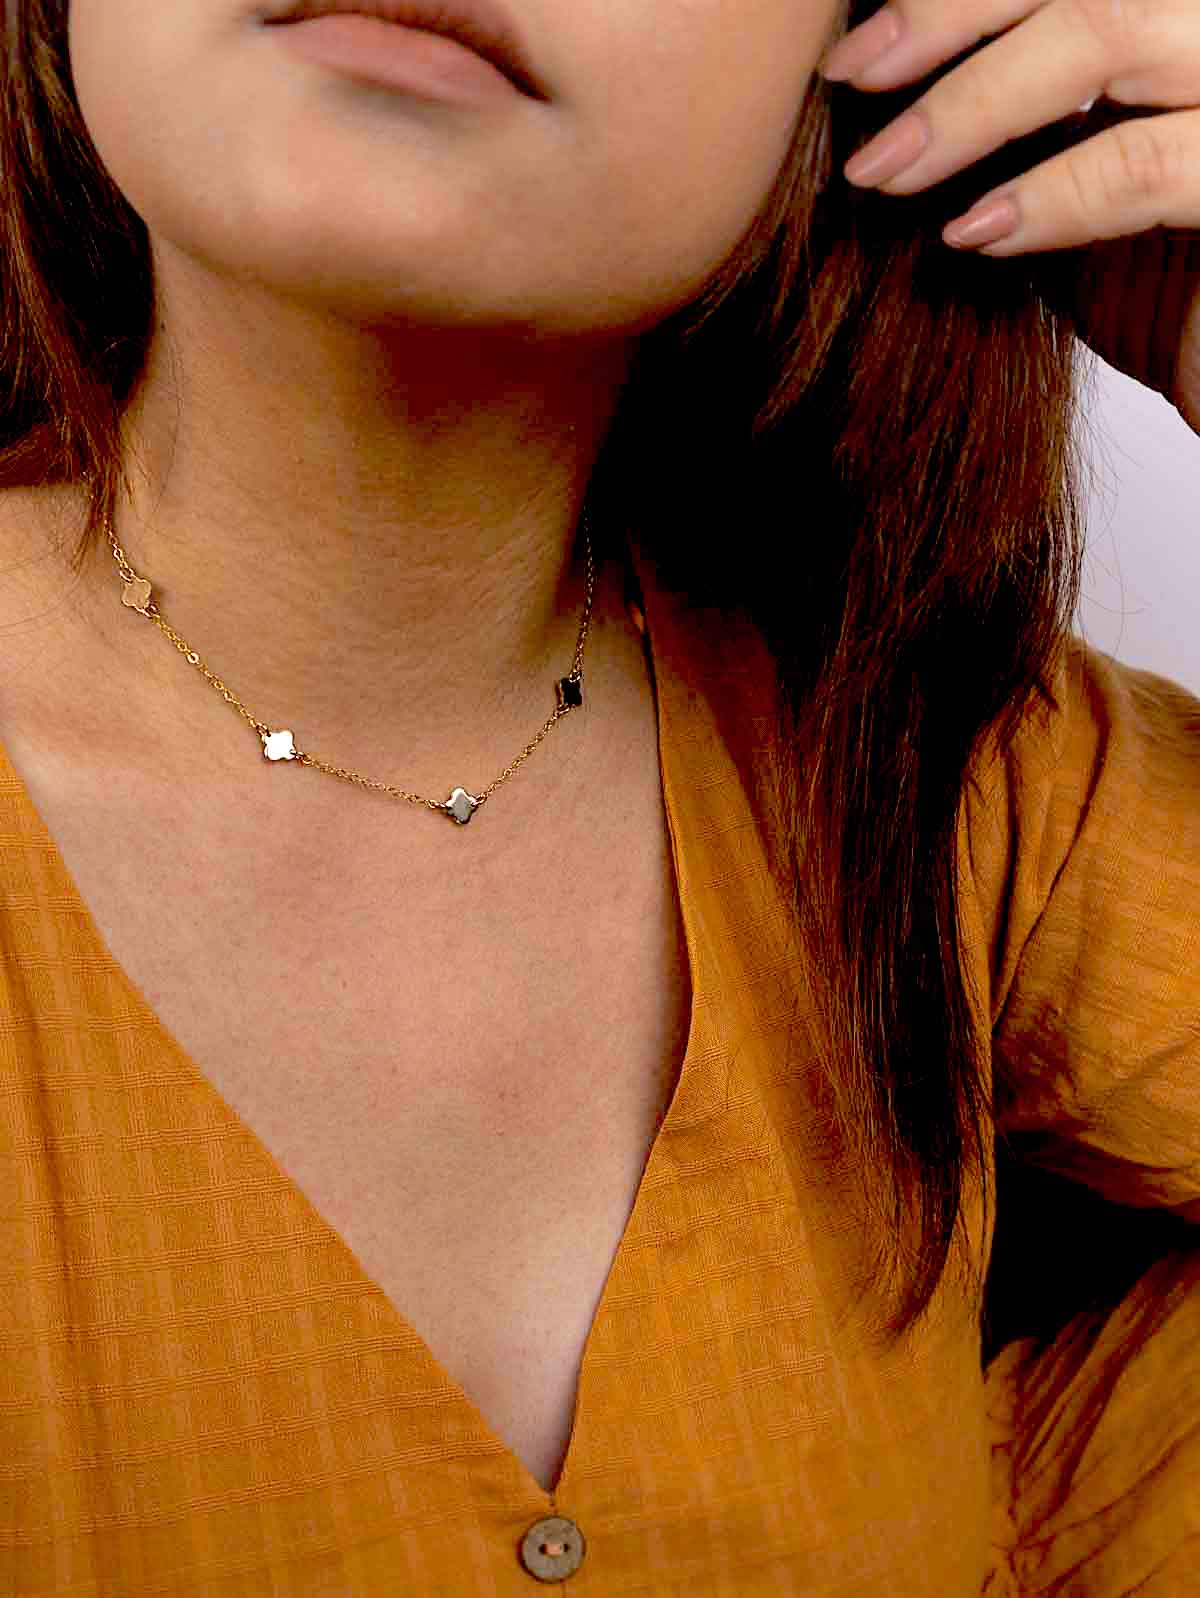 4 leaf clover pendants necklace in gold on neck